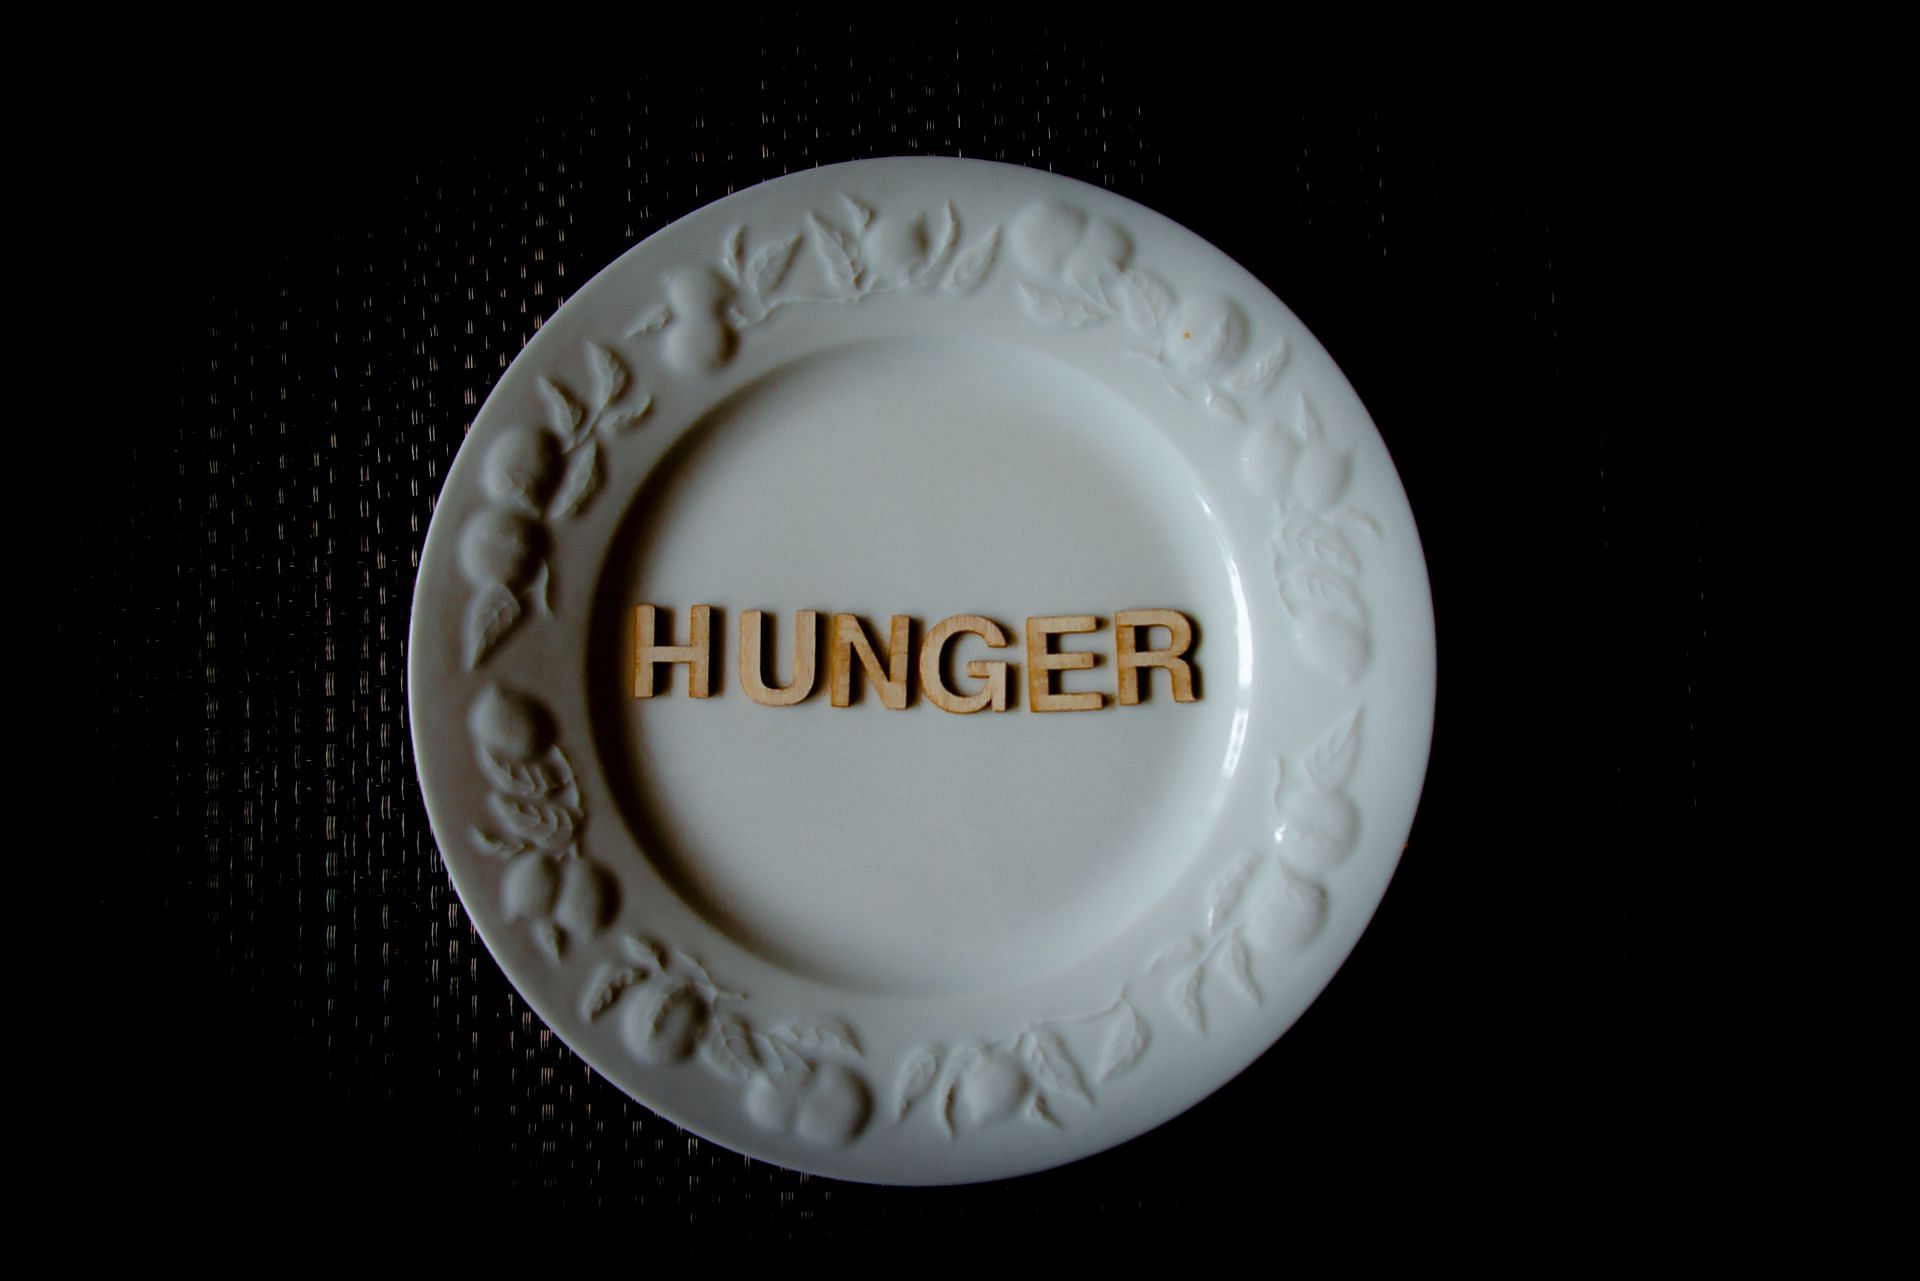 Reasons for sudden hunger (Image via Unsplash/Siegfried P)